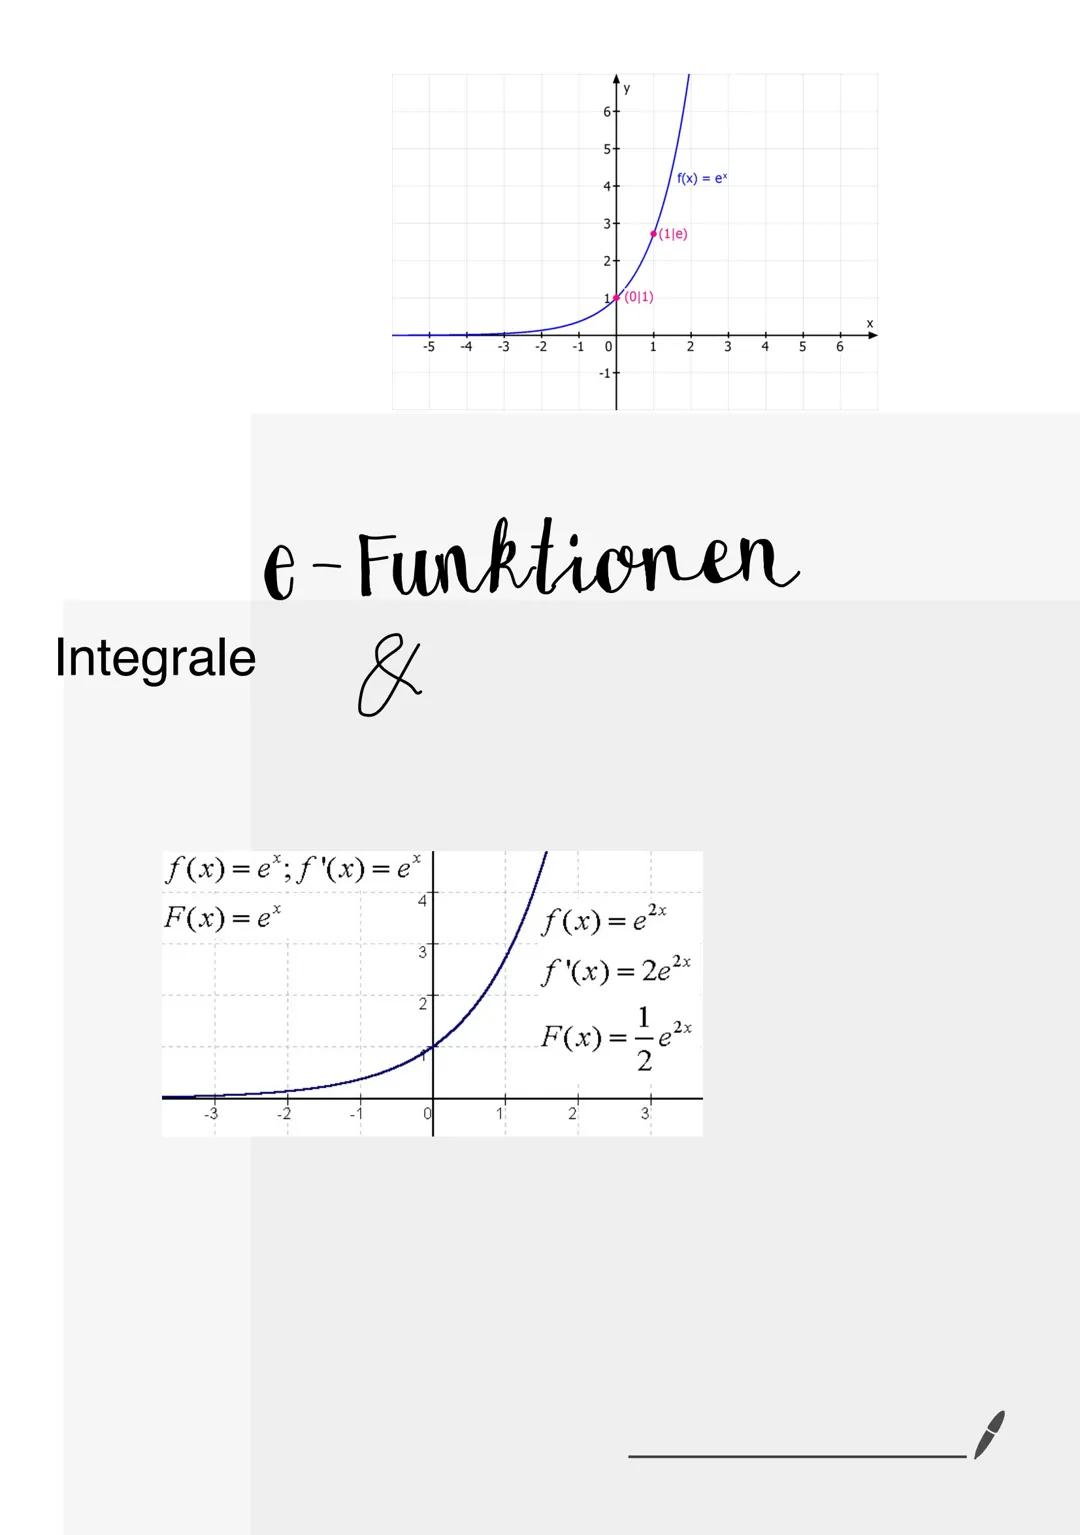 Integrale
-5
f(x)=e*;f'(x) = e
F(x)=e*
-4
-3
-2
-1
5-
4-
3-
2+
1 (0/1)
0
-1-
1
f(x) = ex
(1je)
2
e-Funktionen
&
f(x)=e²x
f'(x) = 2e²x
F(x)= 